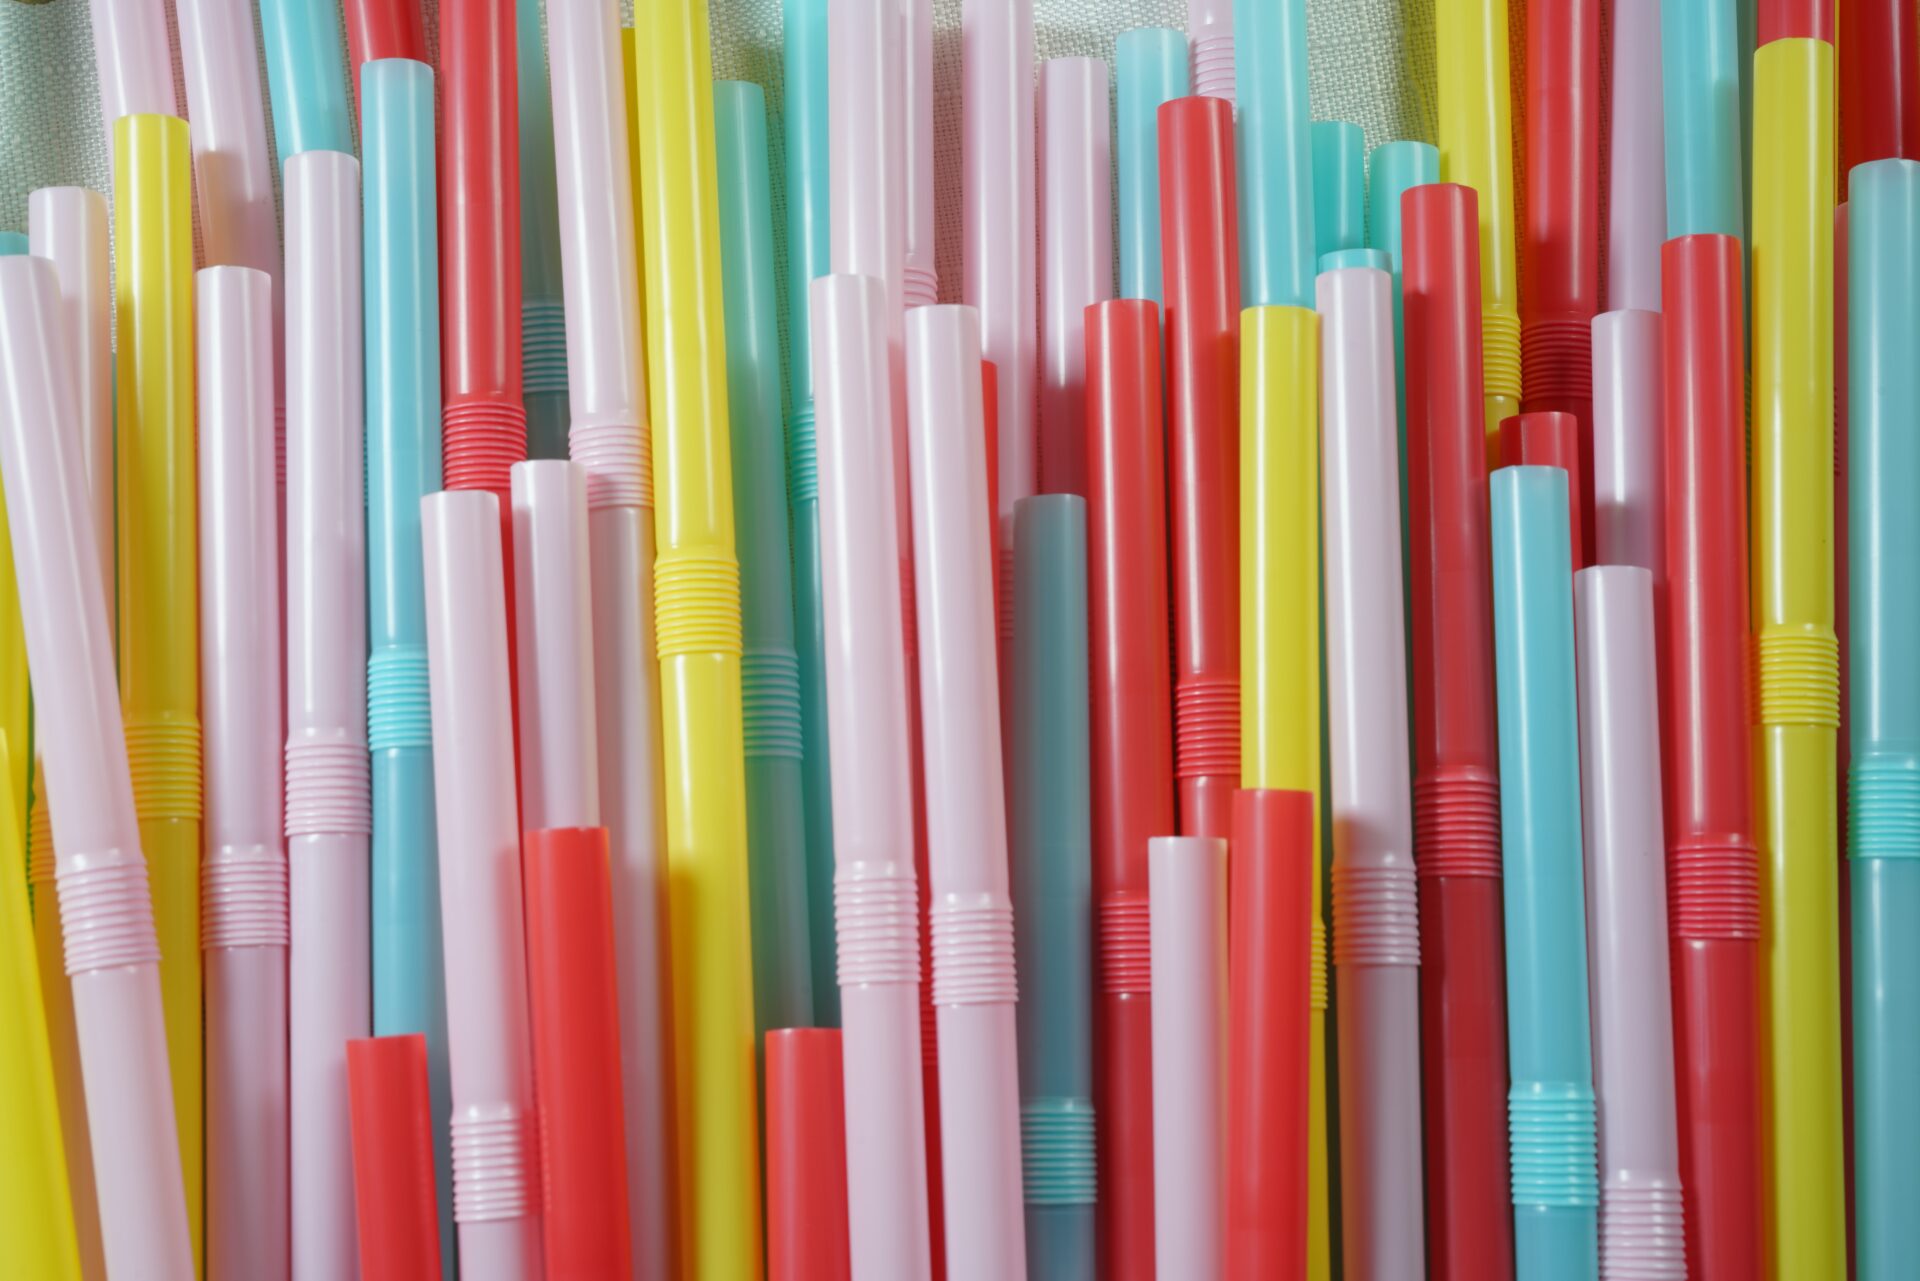 Single-use plastic straws